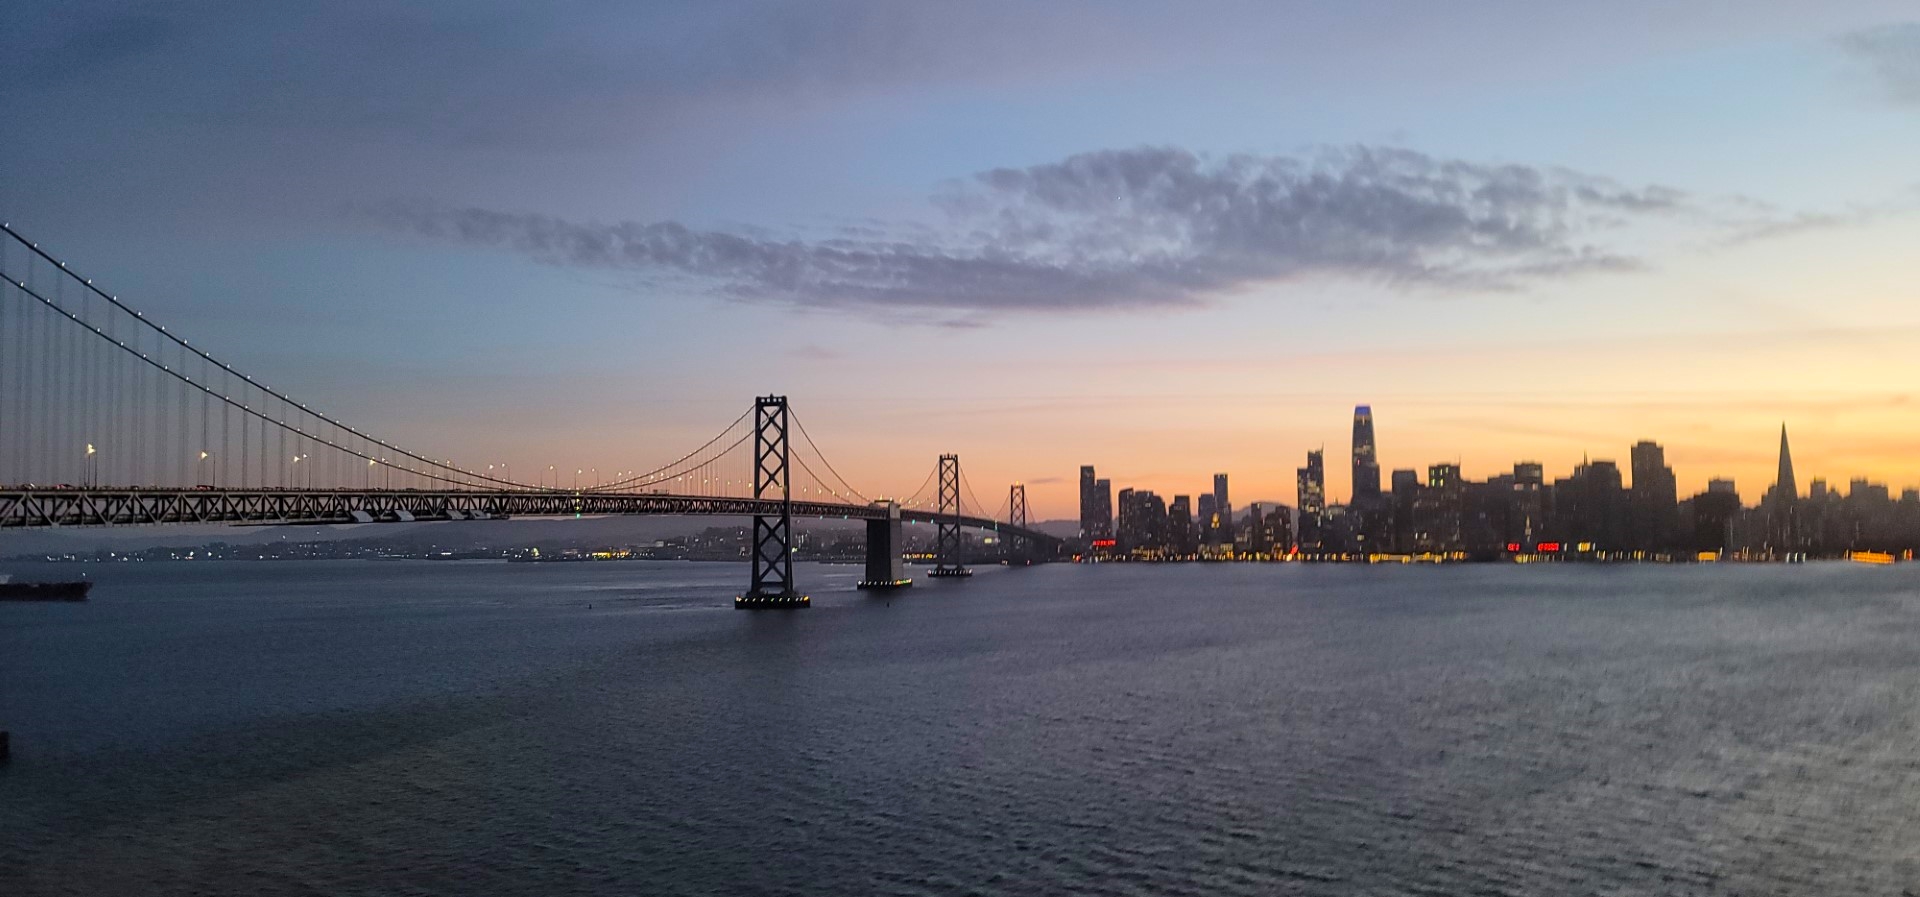 sunset at Golden Gate Bridge